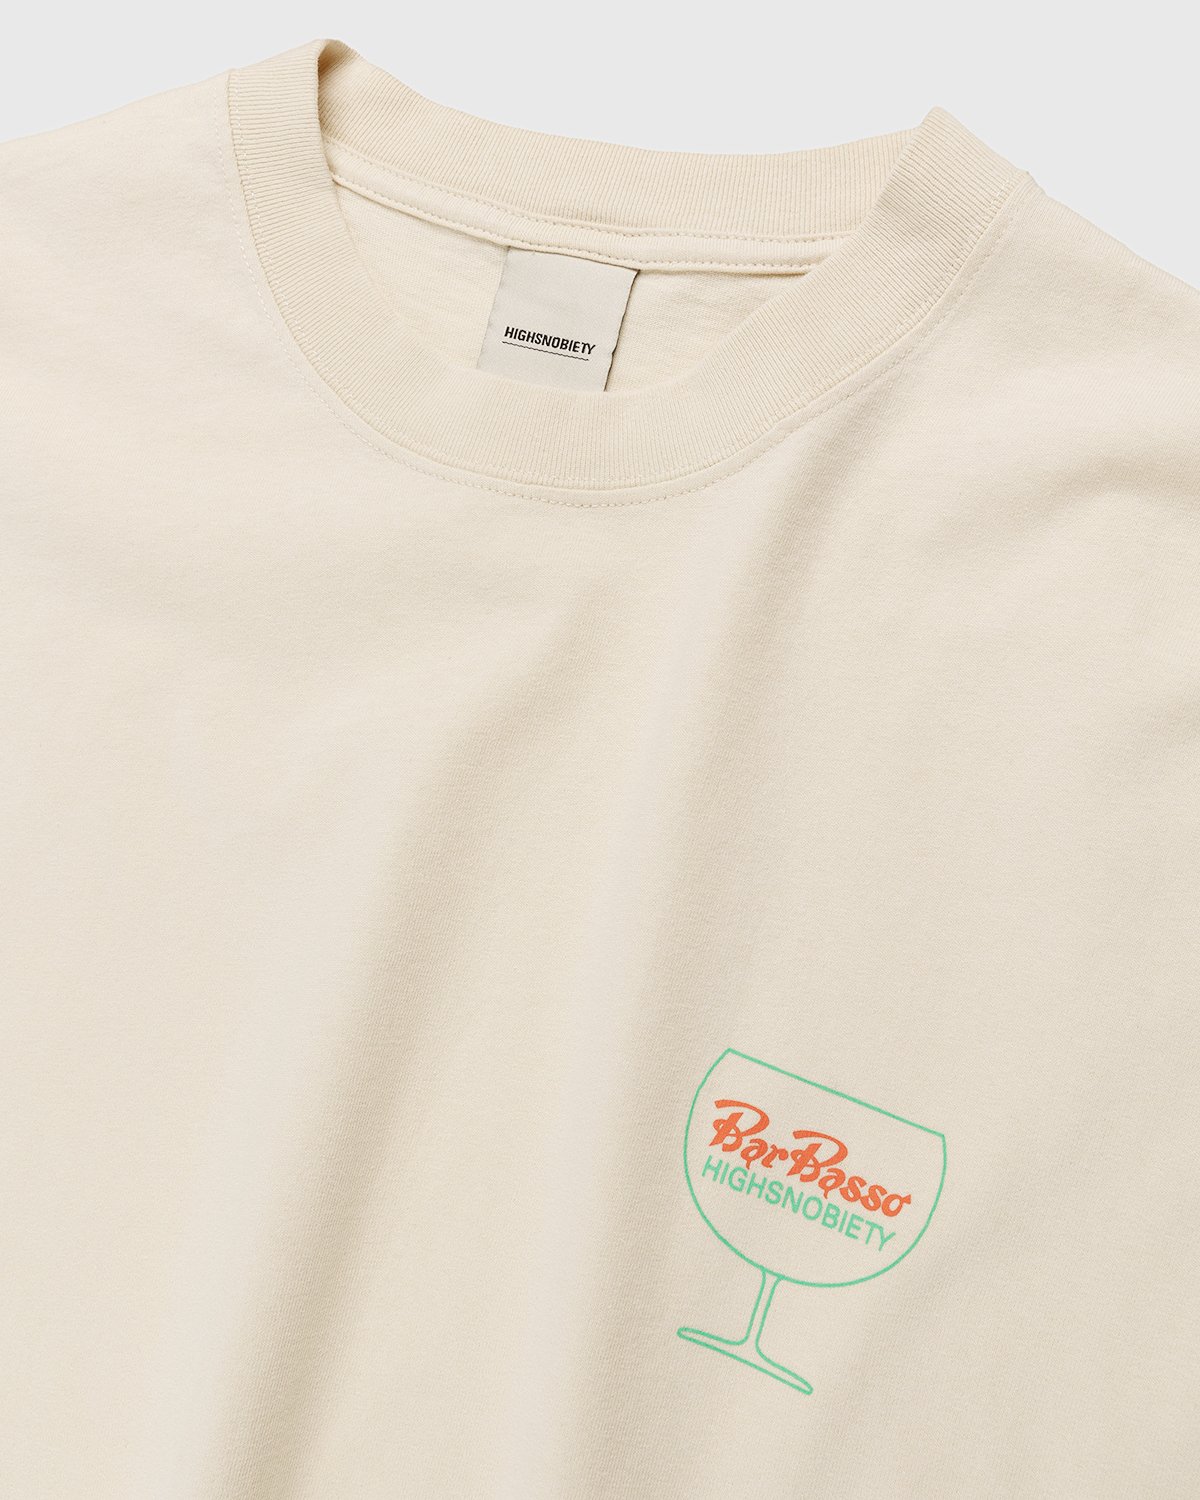 Bar Basso x Highsnobiety - Logo T-Shirt Eggshell - Clothing - Beige - Image 3